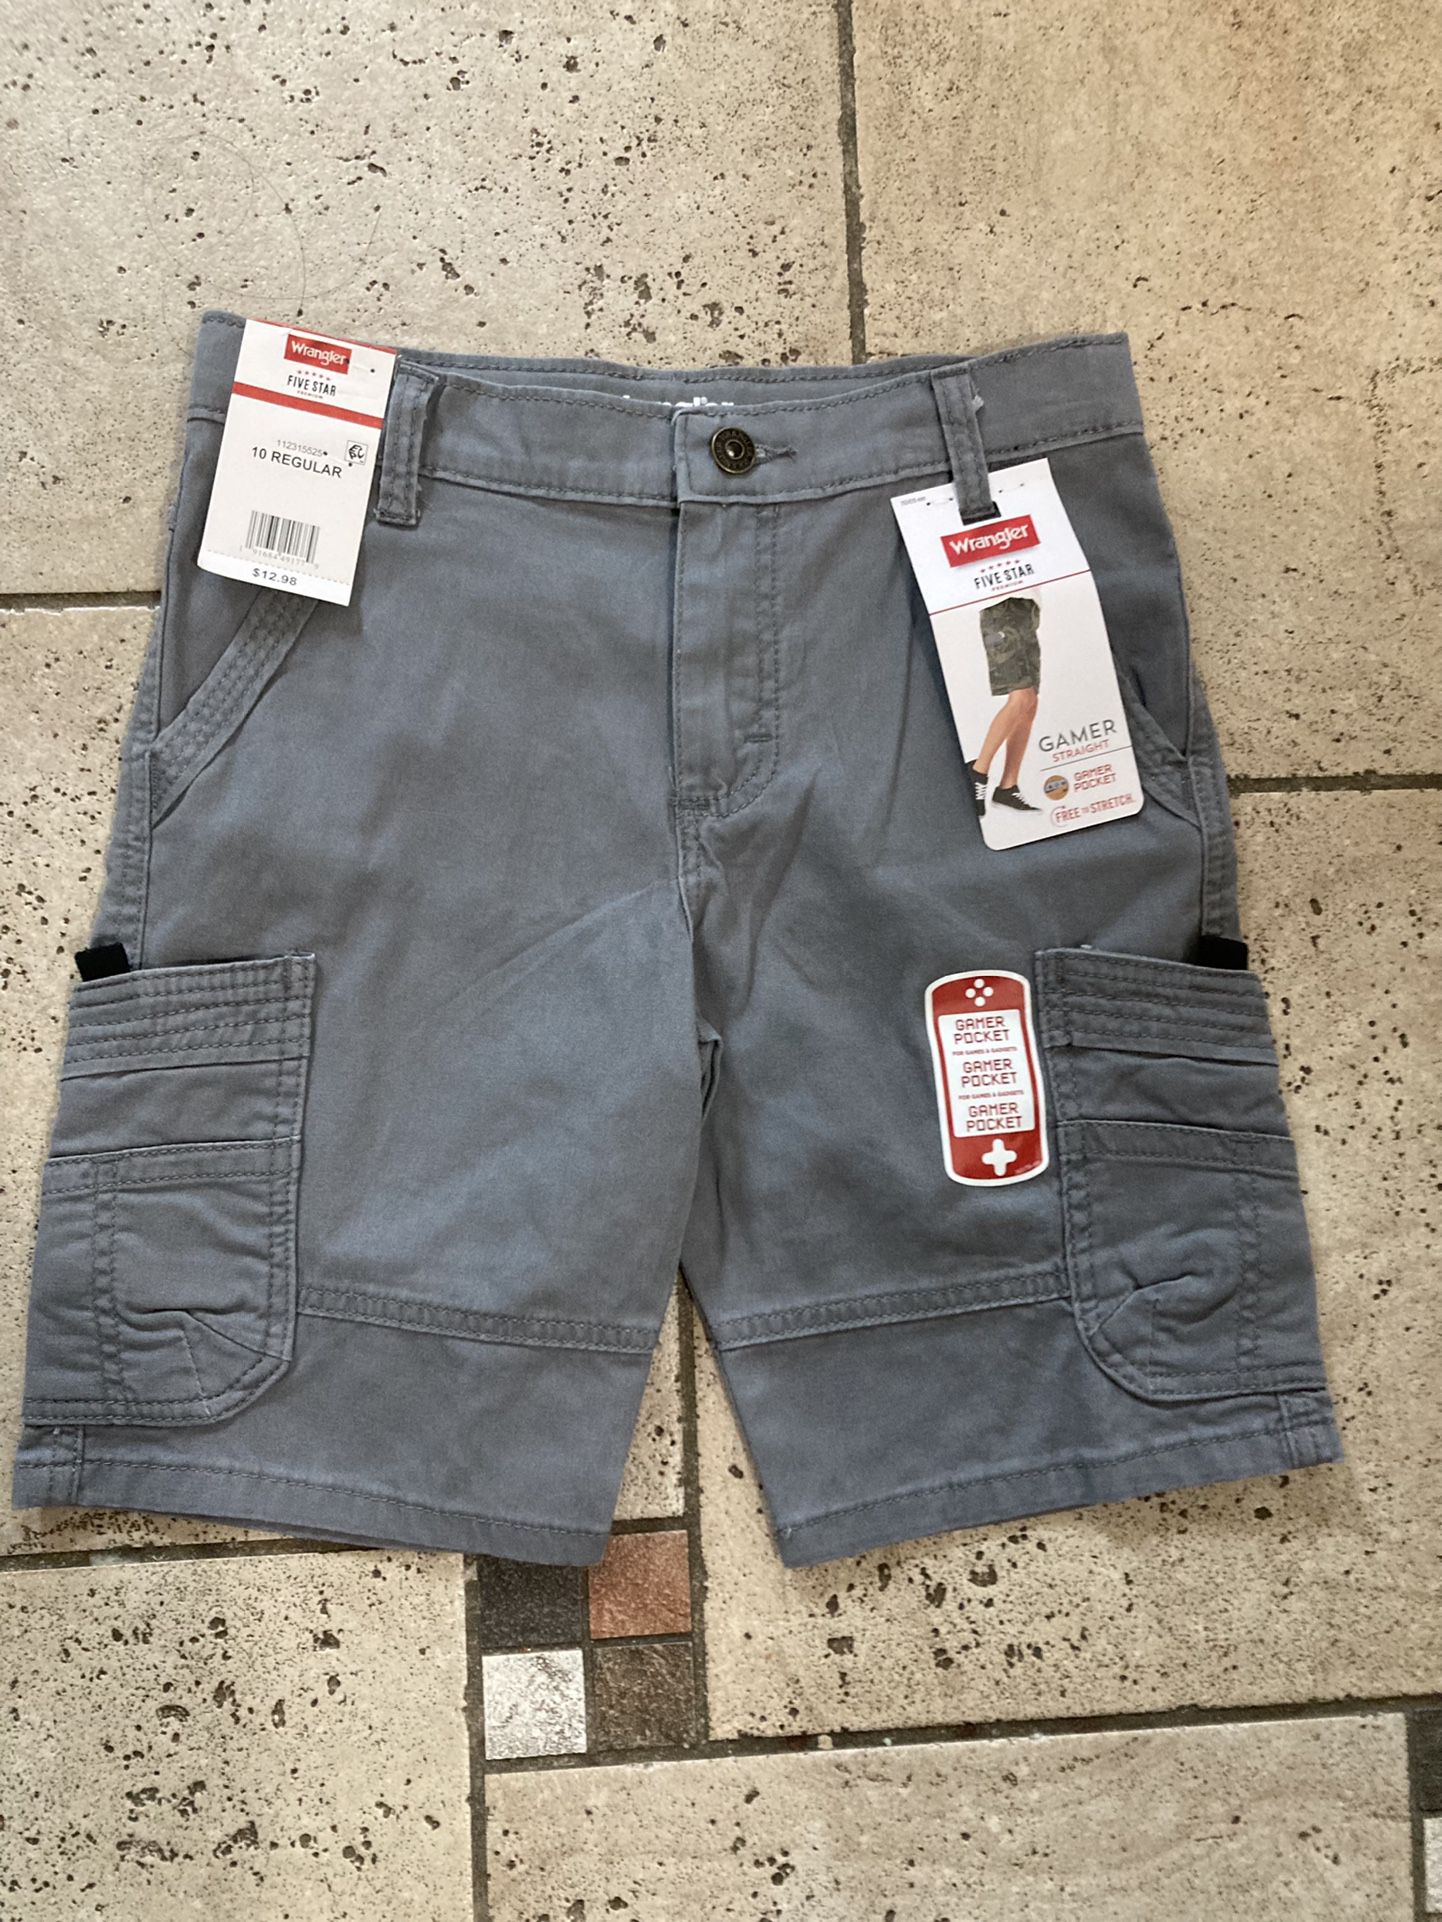 NWT Wrangler Boys Shorts Bundle Size 10 for Sale in Cordova, TN - OfferUp